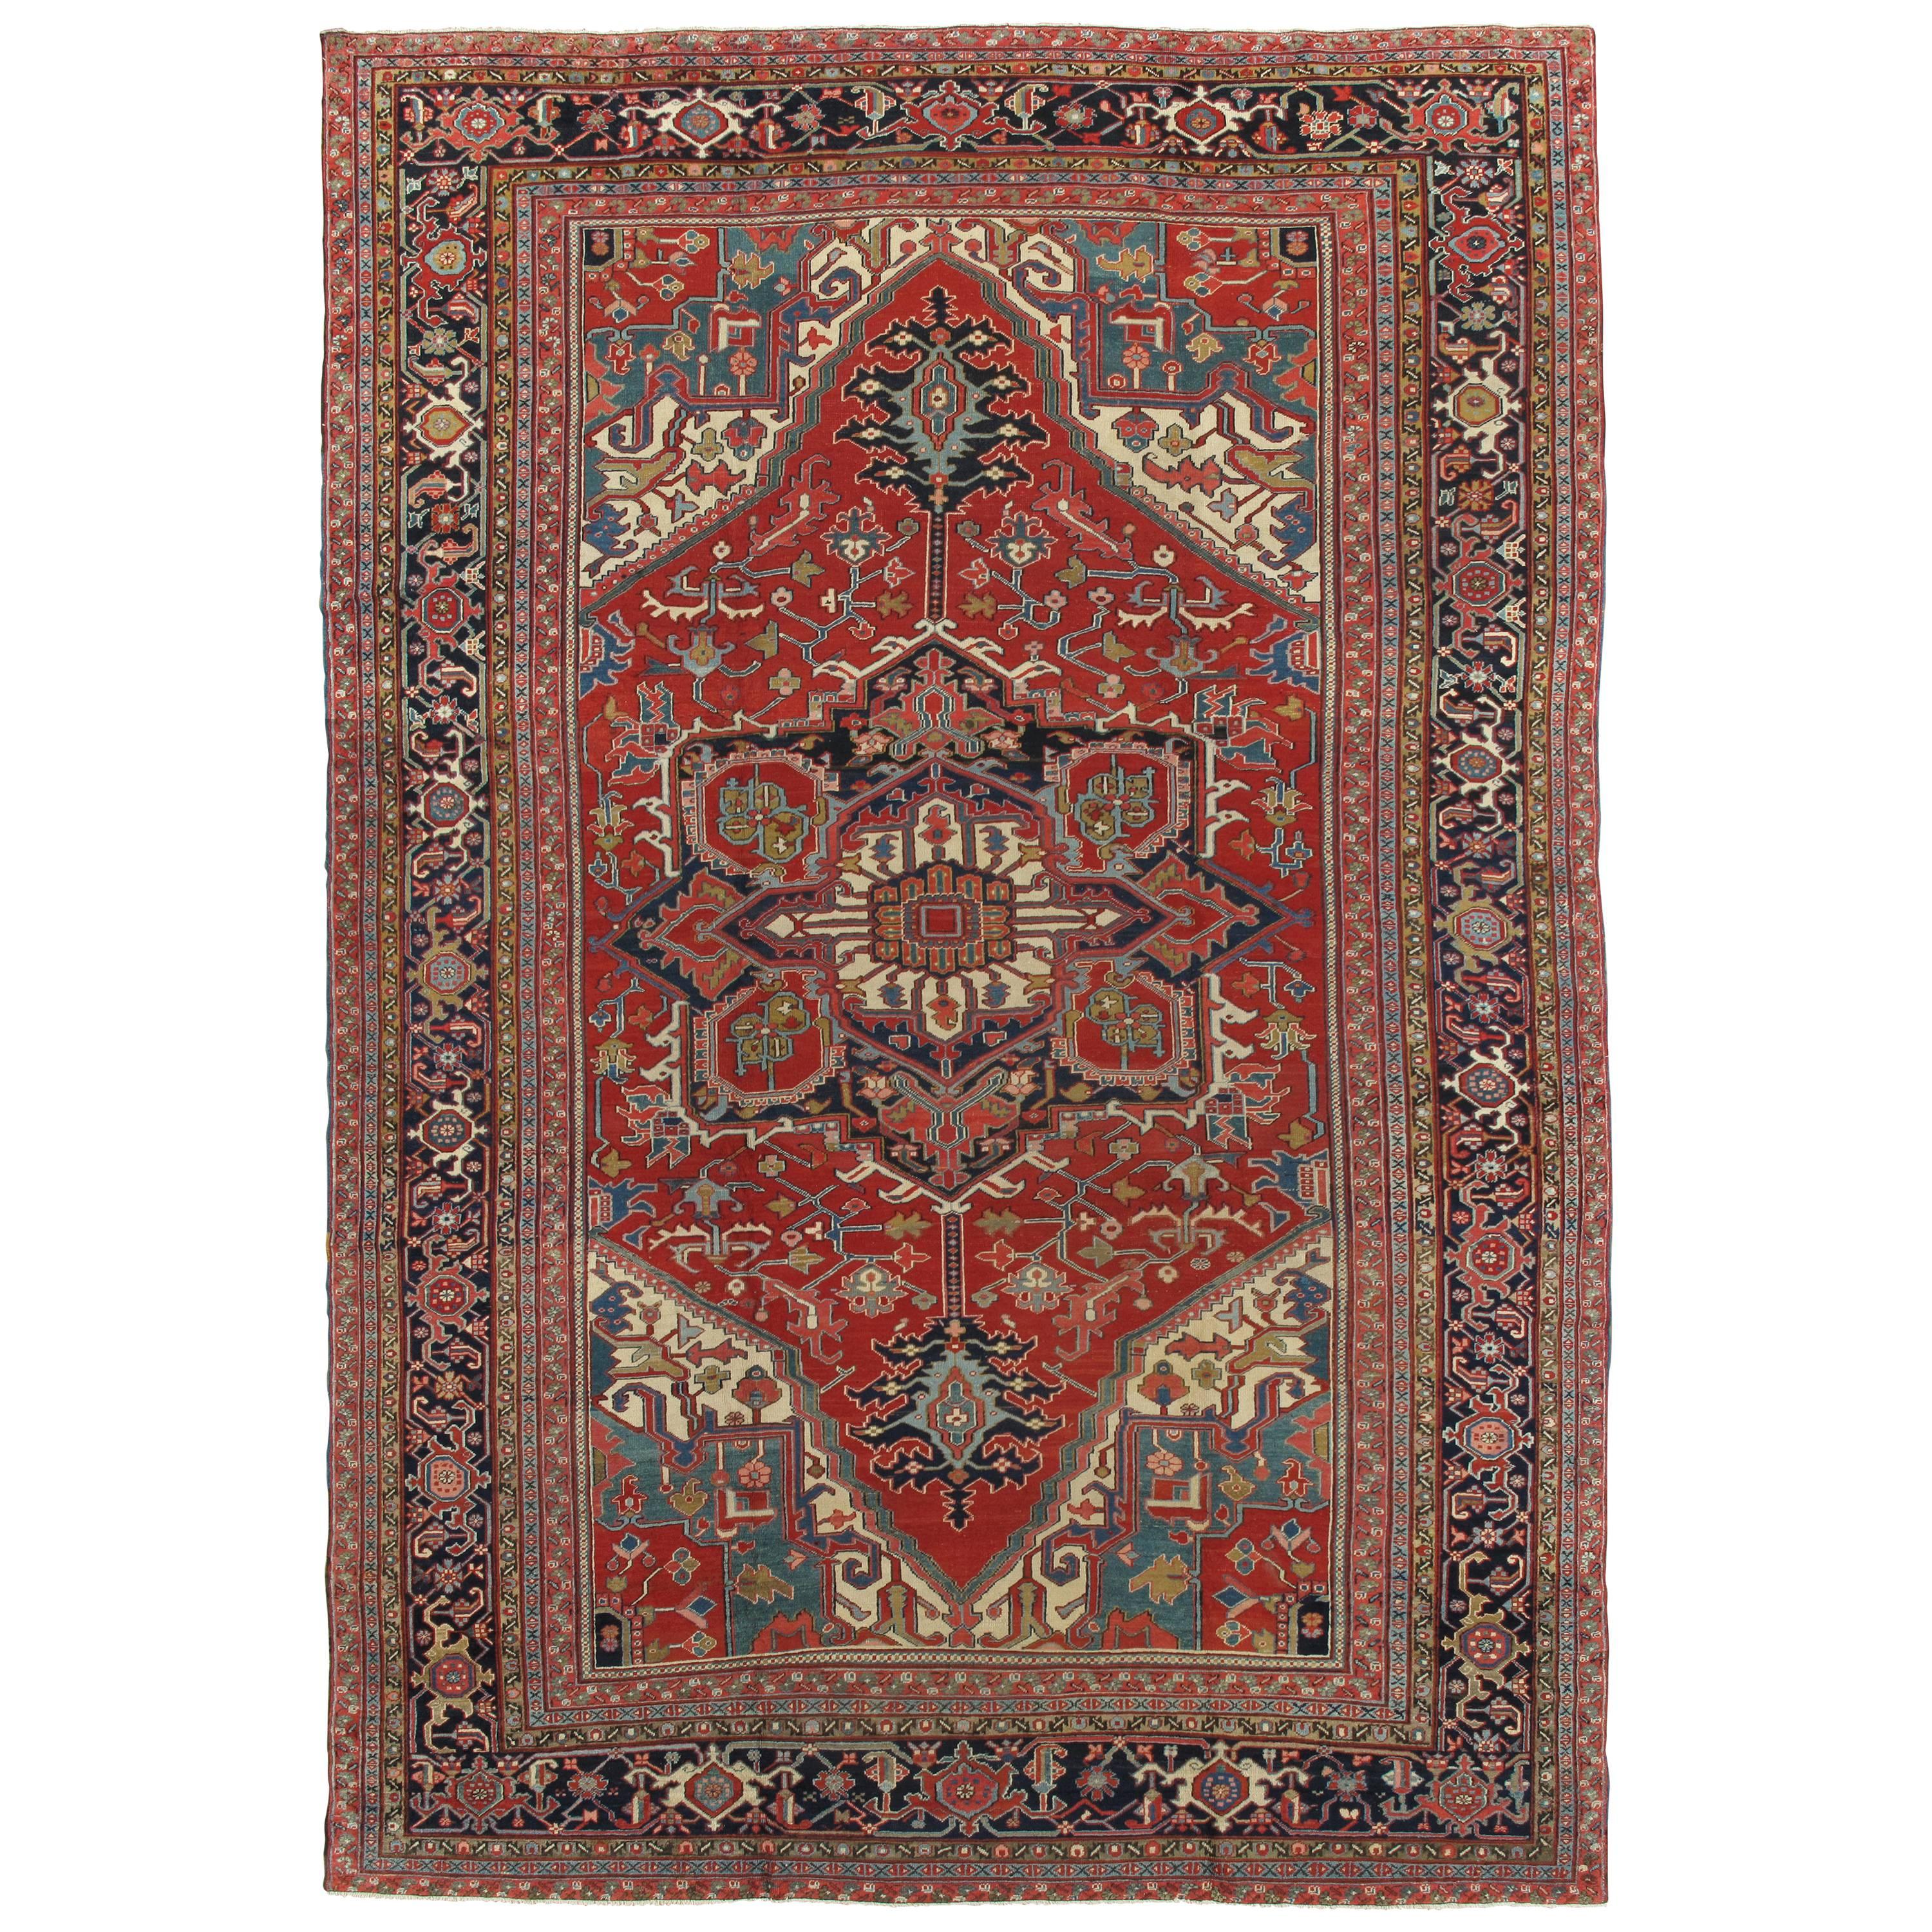 Antique Persian Heriz Carpet, Handmade Wool Oriental Rug, Red and Navy Light Blue